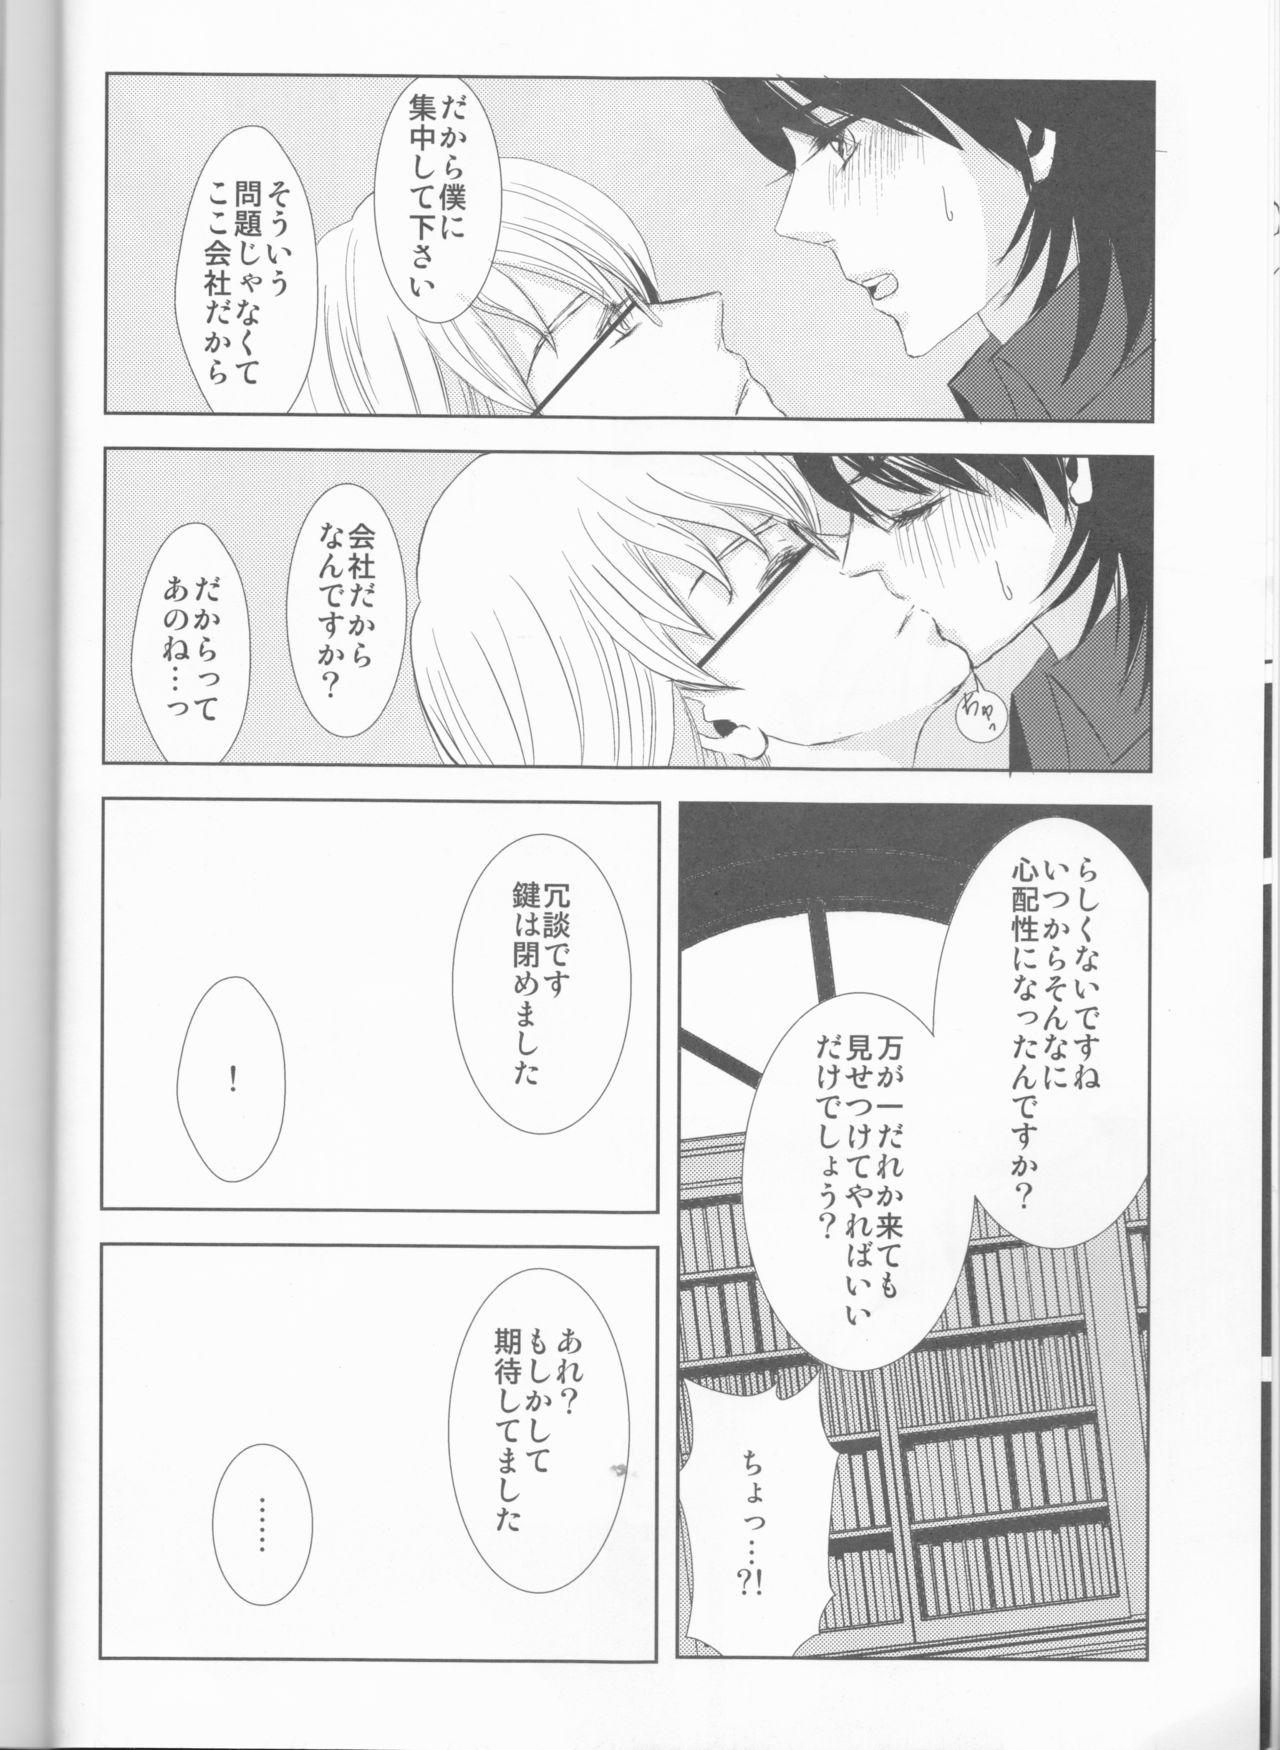 Curvy Itsuka wa inaku naru kimi e - Tiger and bunny Ball Busting - Page 7